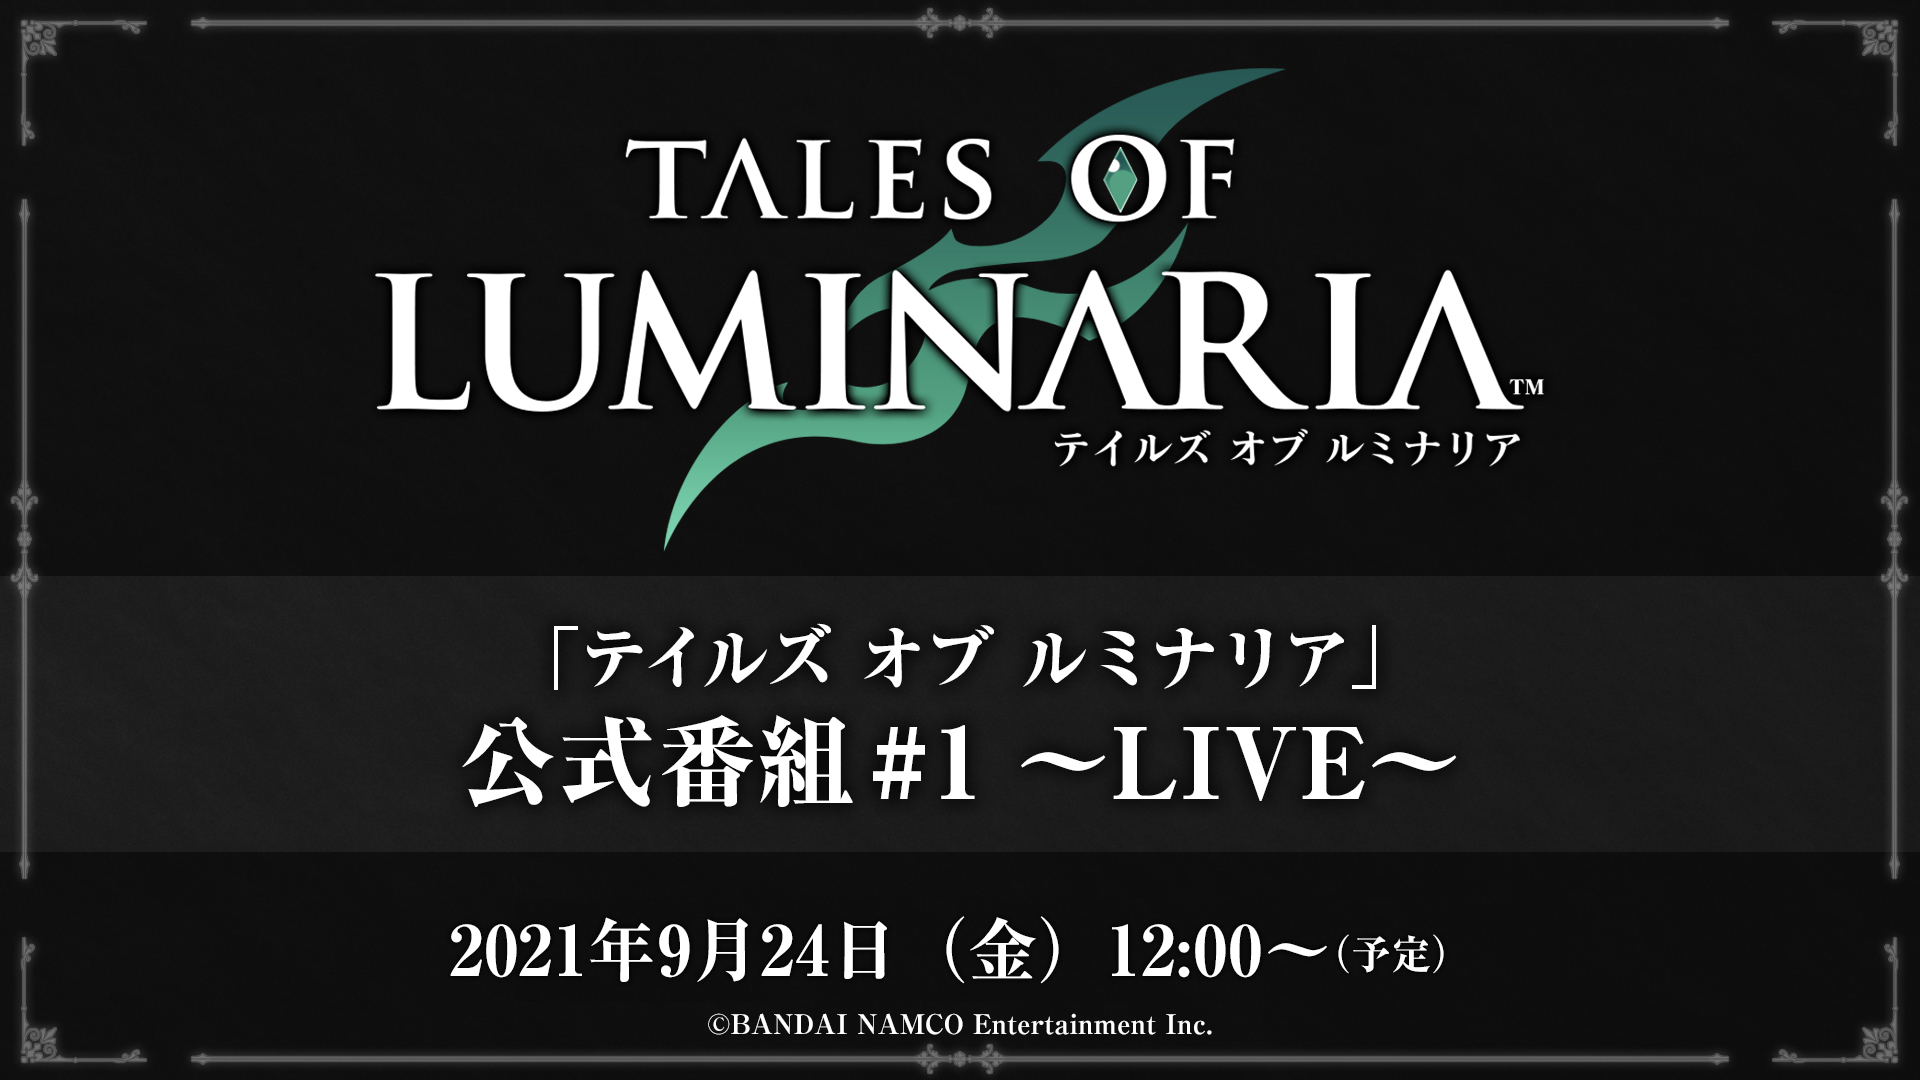 Tales of Luminaria Livestream